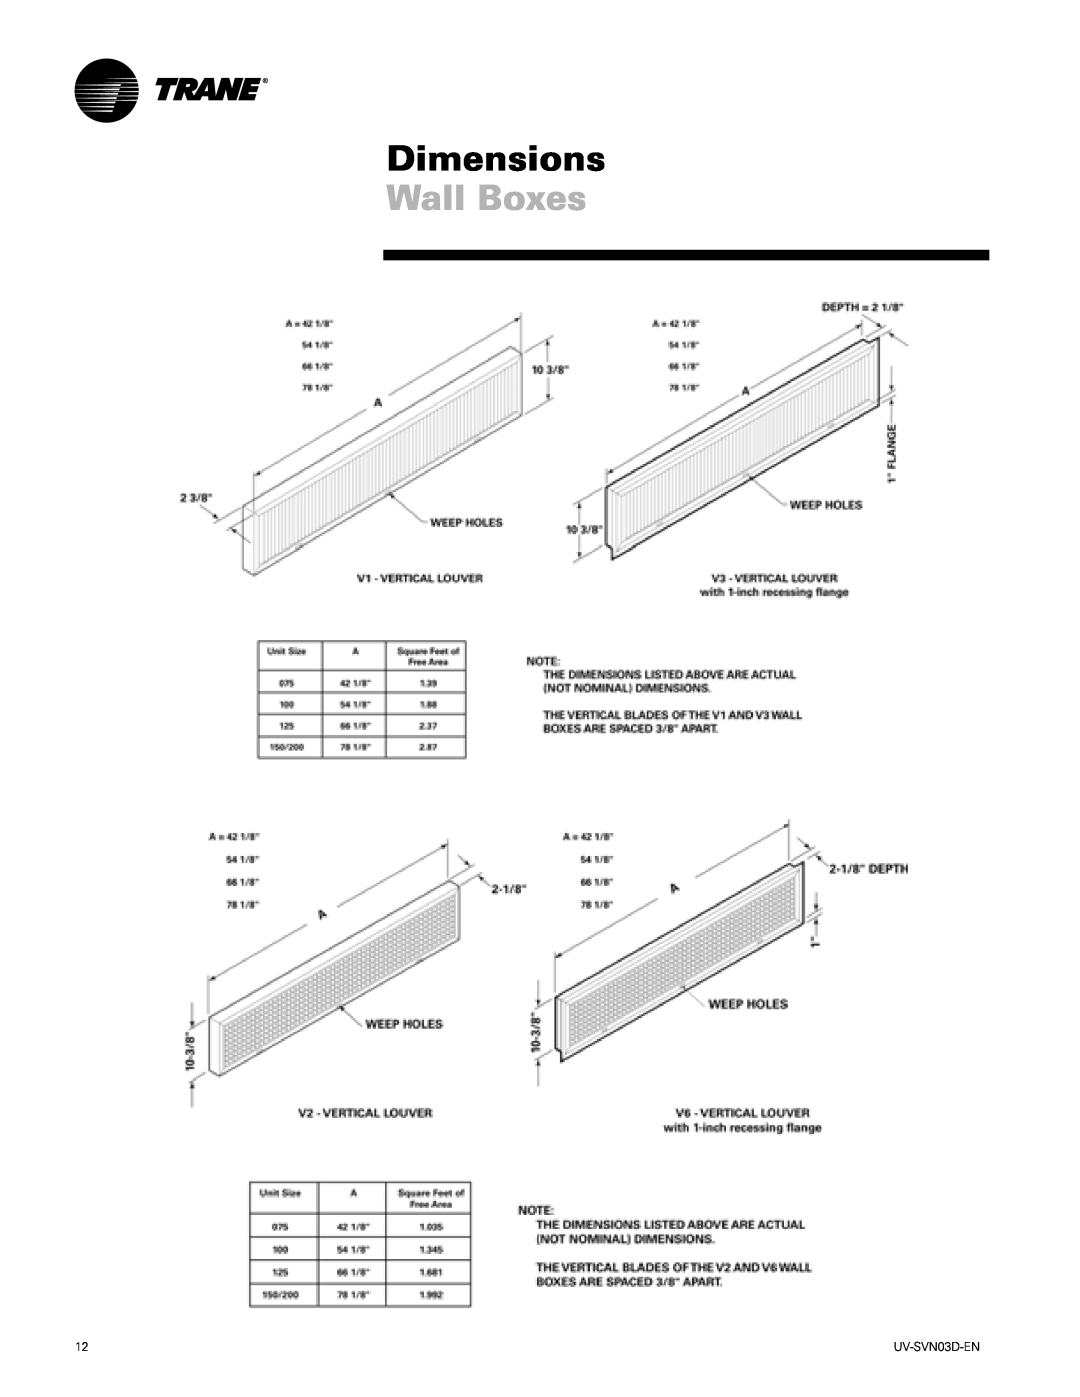 Trane 1500 CFM, 750 CFM manual Wall Boxes, Dimensions 